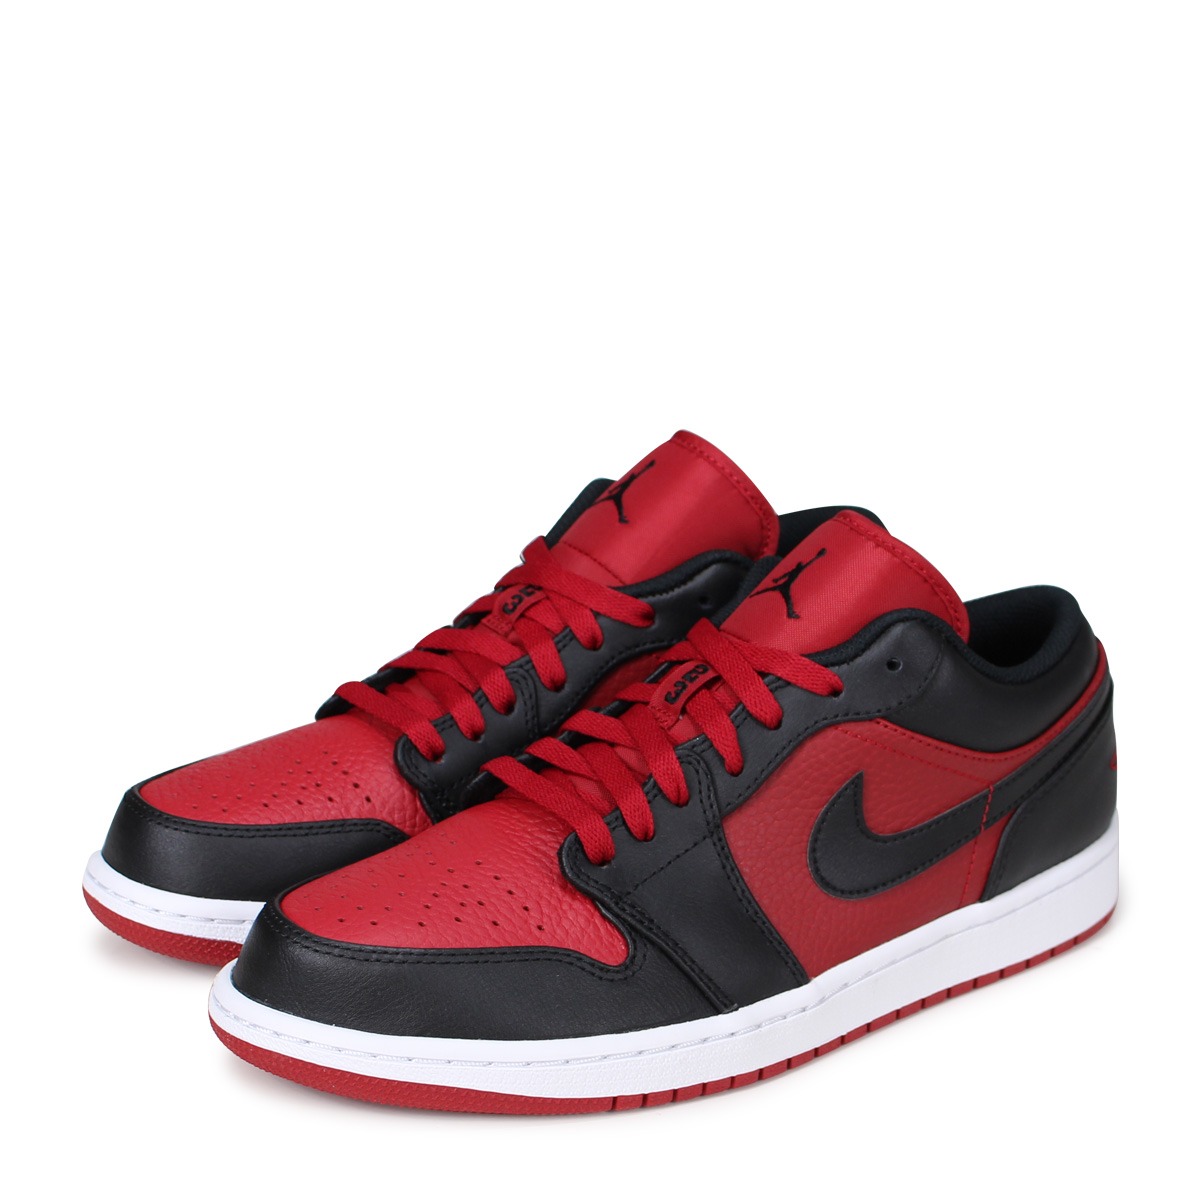 Jordan 1 low оригинал. Nike Jordan 1 Low. Nike Air Jordan 1 Low. Nike Air Jordan 1 Low Red. Nike Air Jordan 1 Low черные.